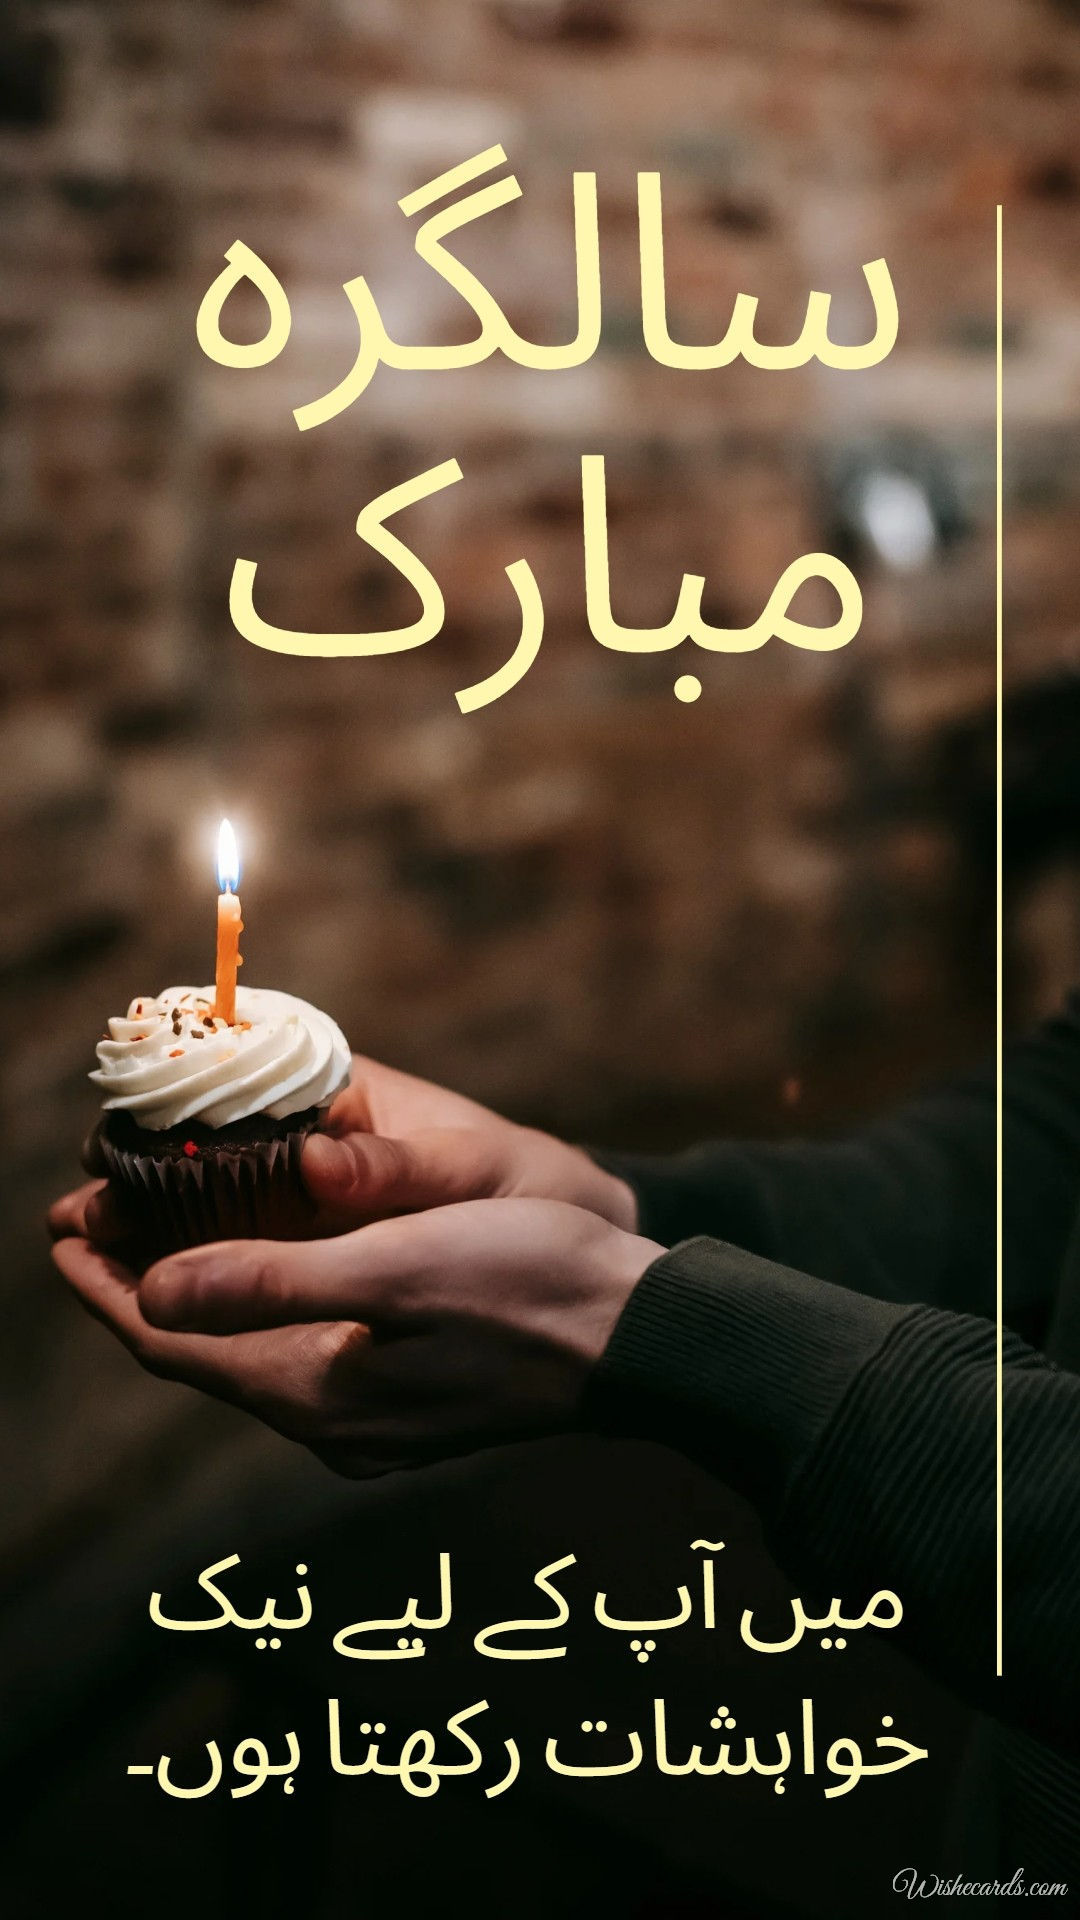 Urdu Birthday Card